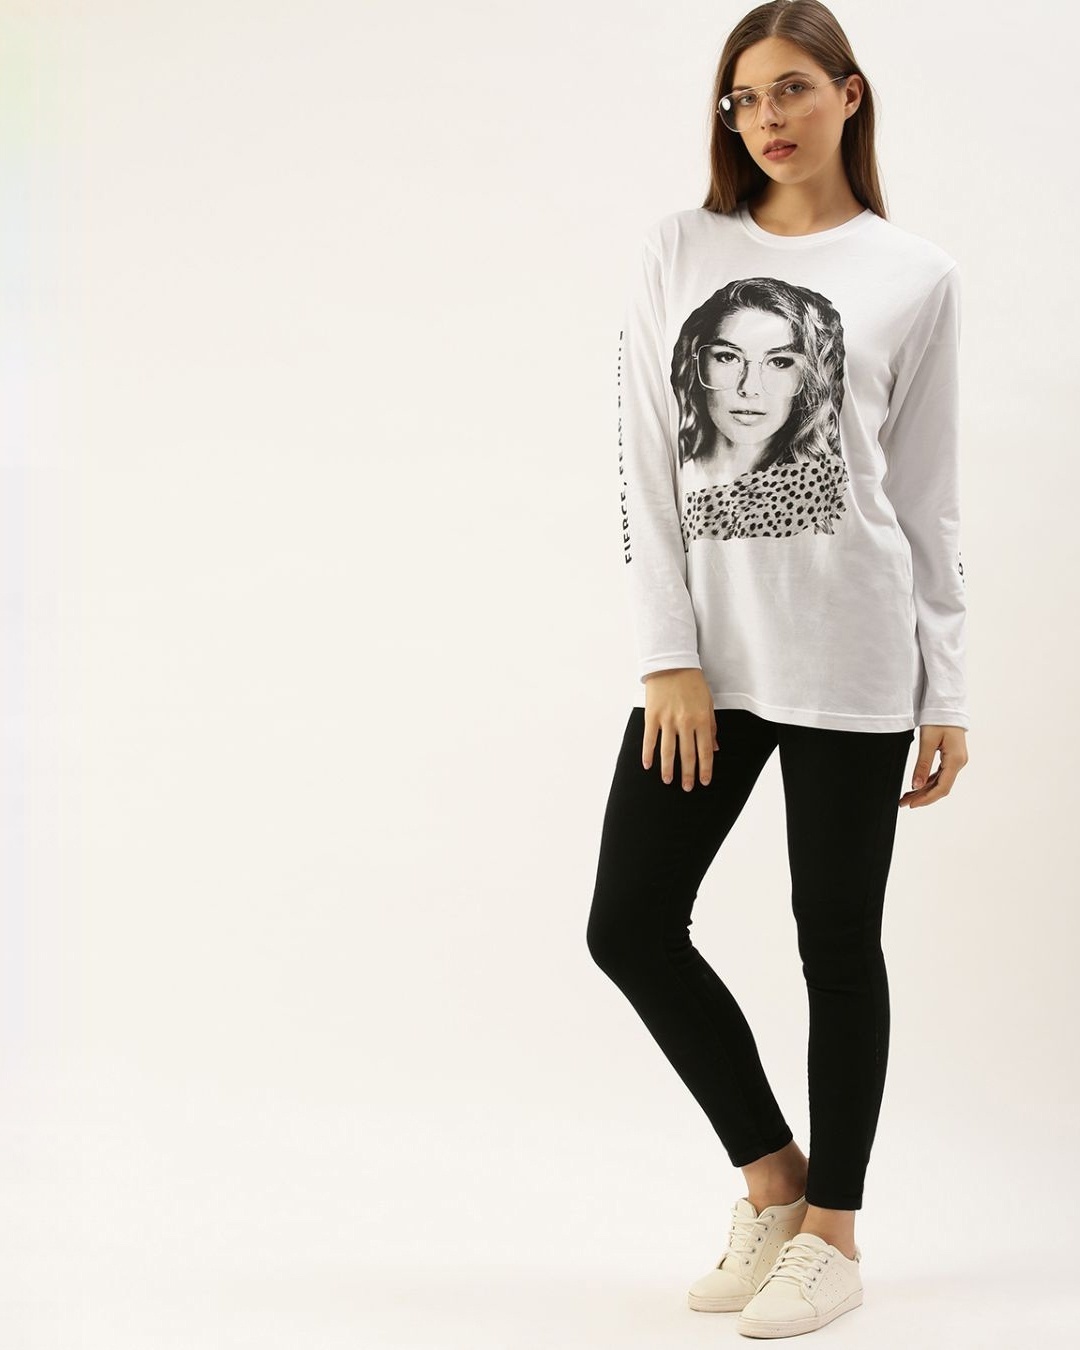 Shop Women's White Graphic Print T-shirt